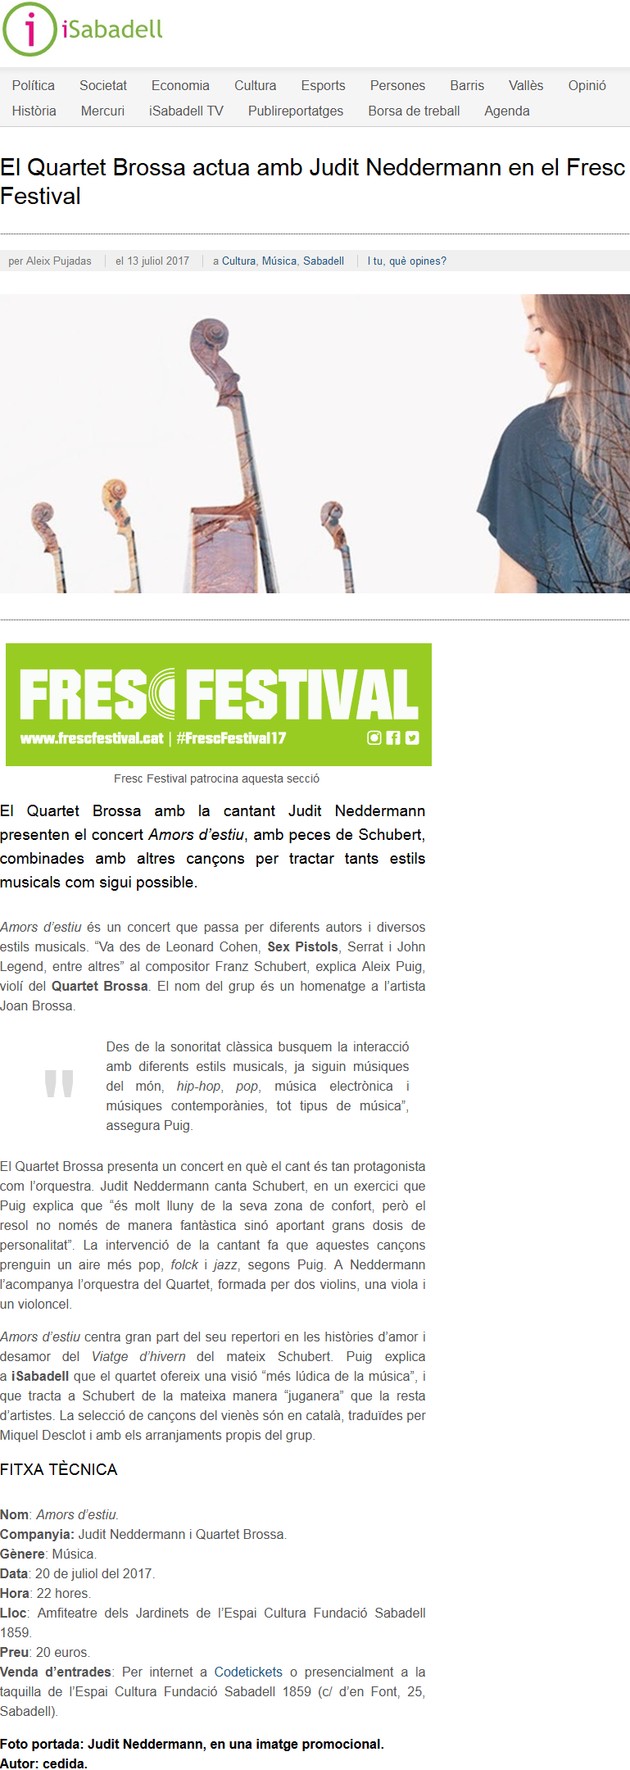 iSabadell: El Quartet Brossa actua amb Judit Neddermann en el Fresc Festival